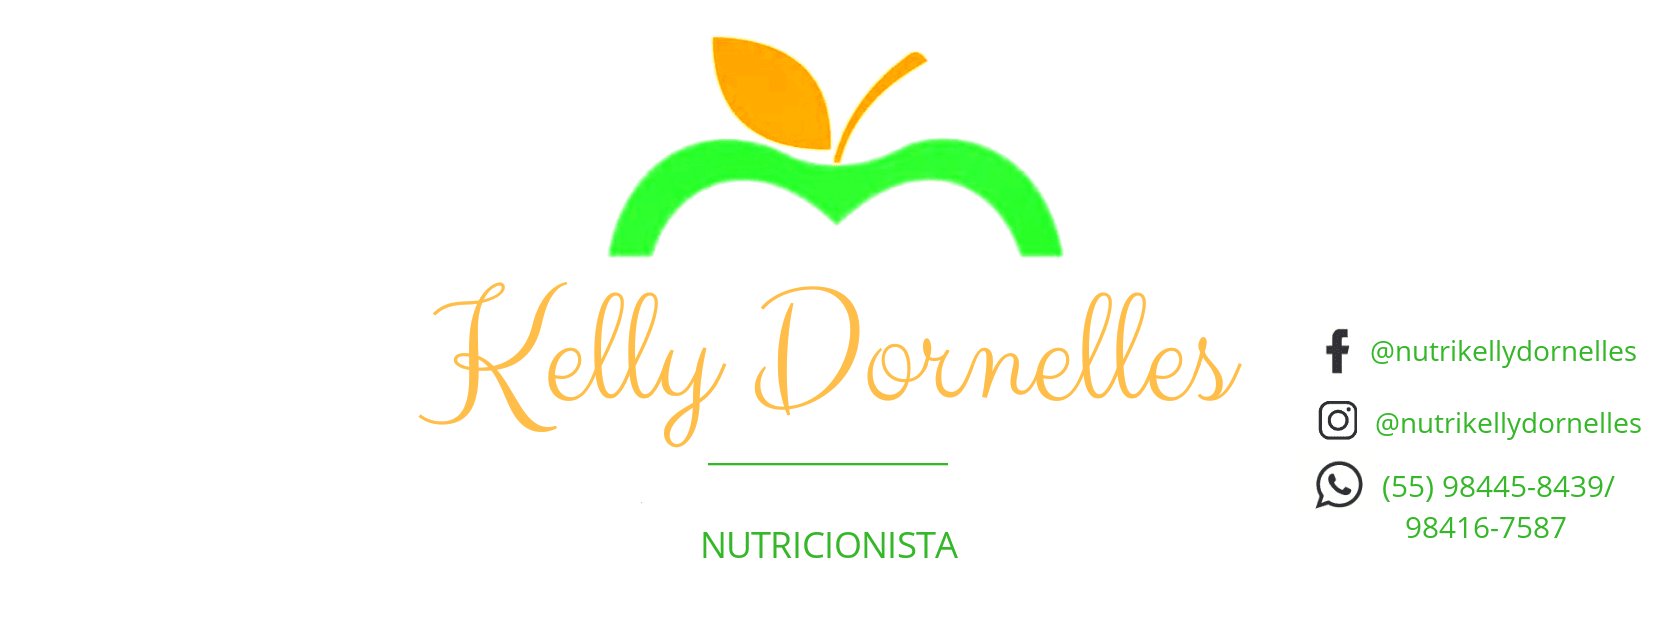 Nutricionista Kelly Dornelles